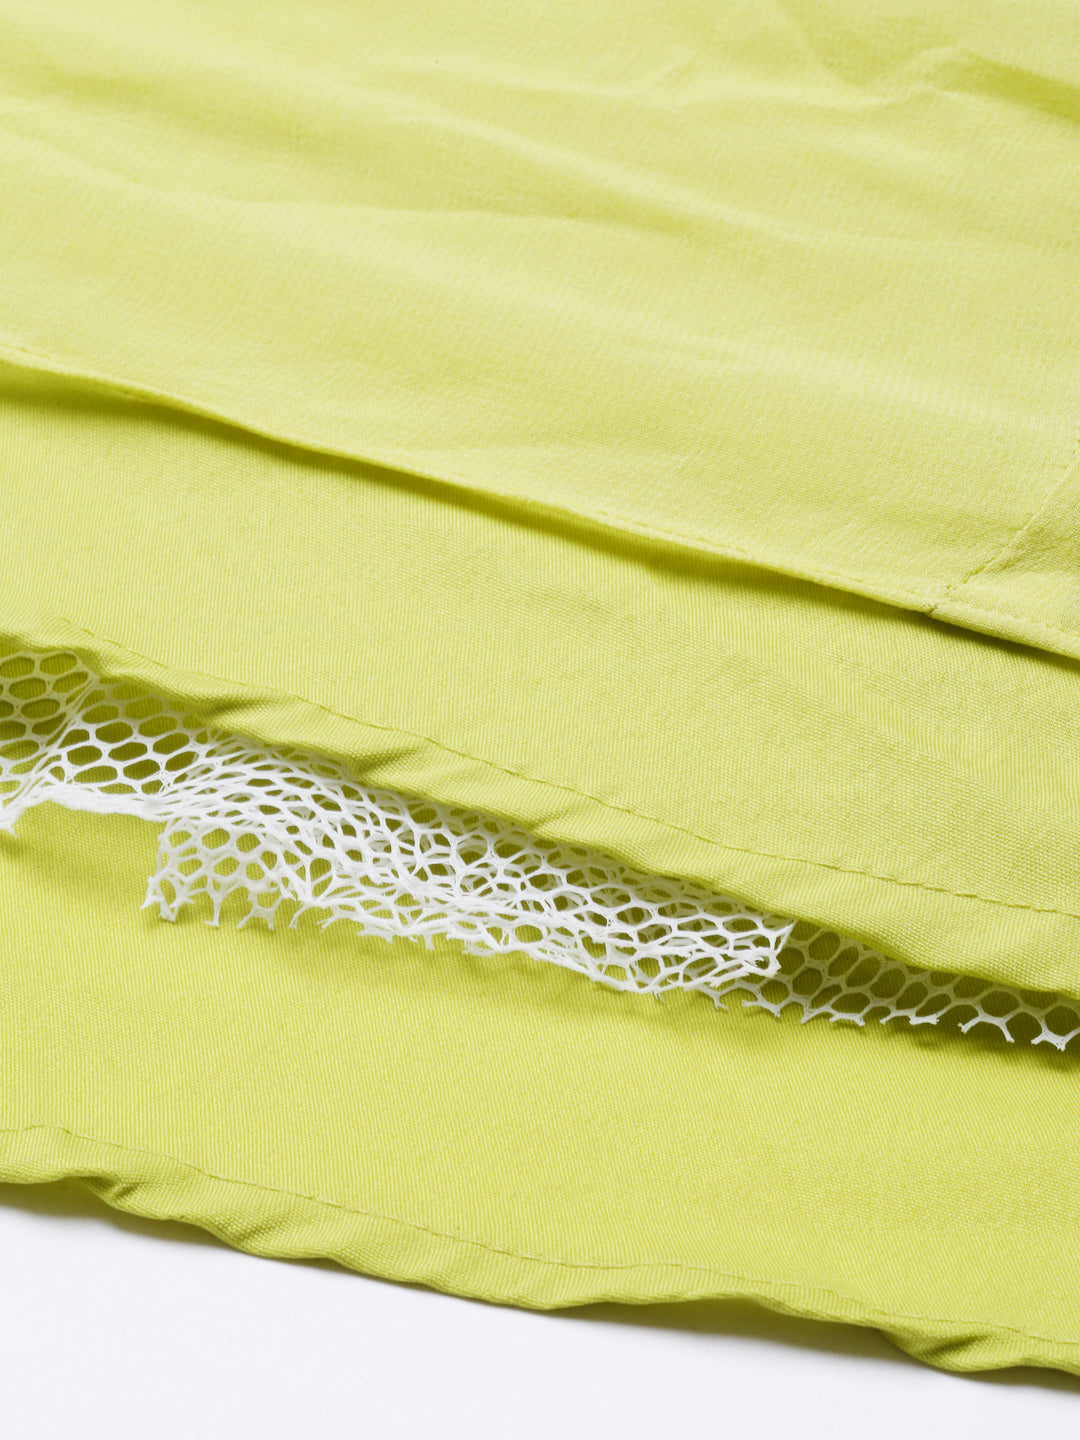 Neeru'S Green Color, Georgette Fabric Suit-Anarkali